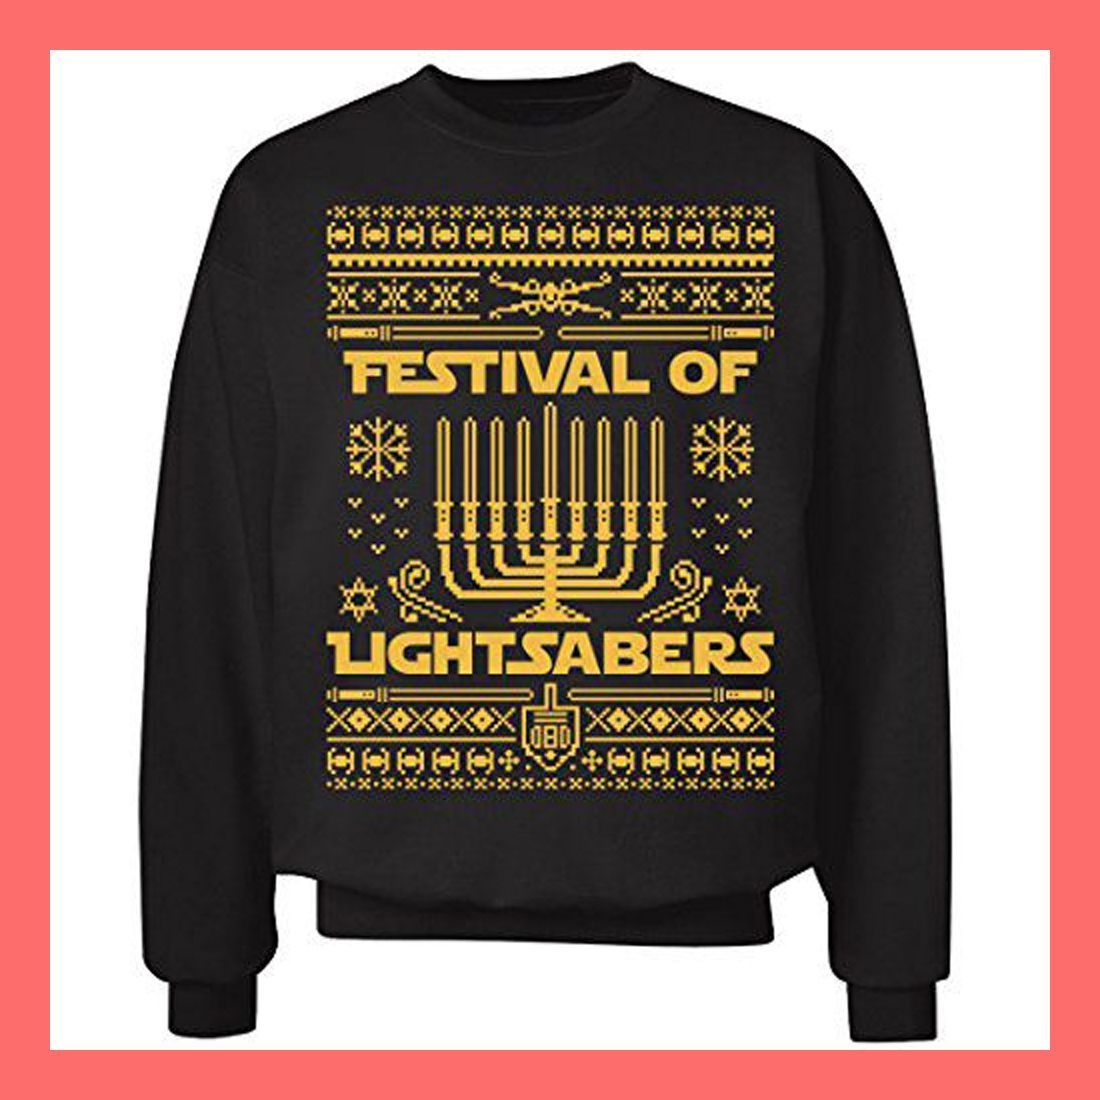 Festival of Lightsabers Sweatshirt 